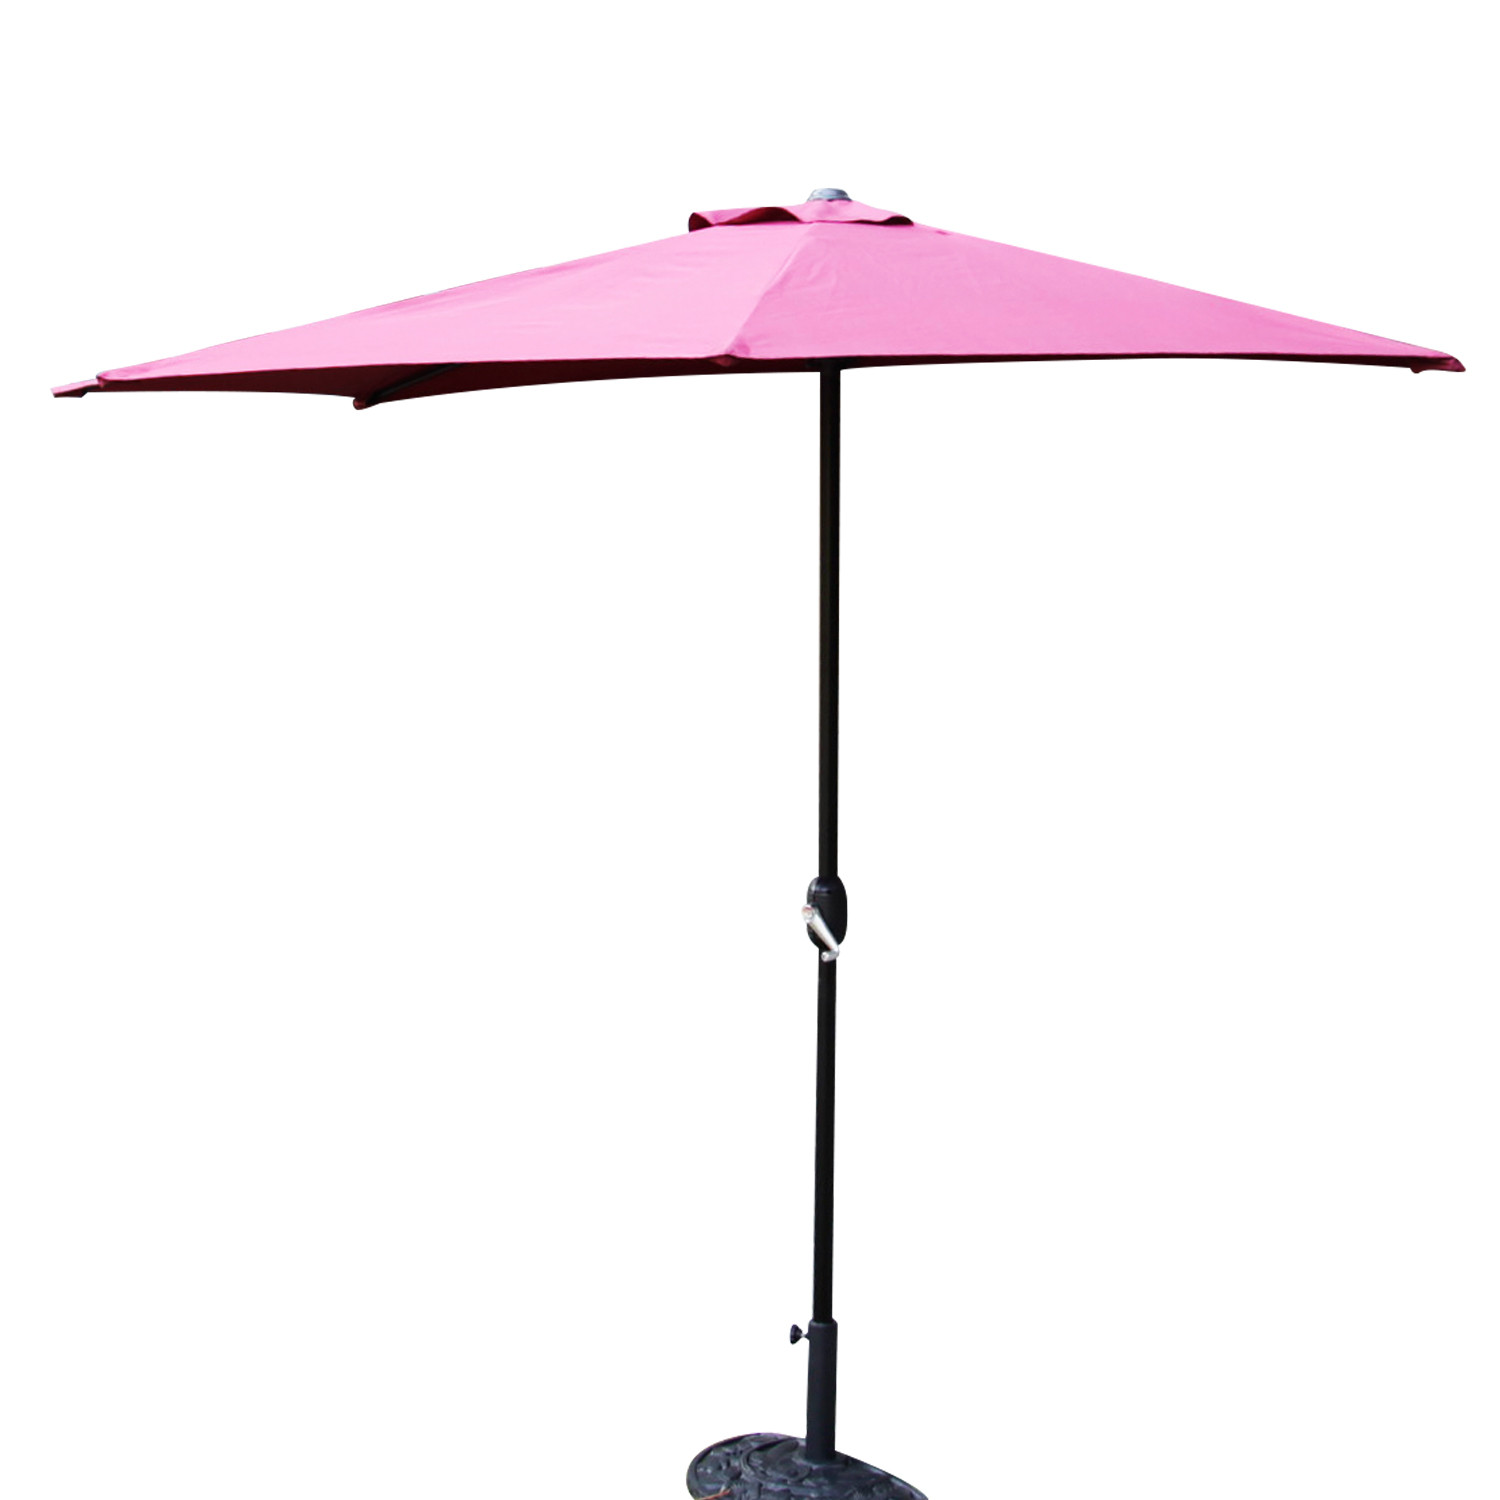 Best ideas about Half Patio Umbrella
. Save or Pin Half Round 5 Ribs 10FT Outdoor Patio Umbrella Wall Corner Now.